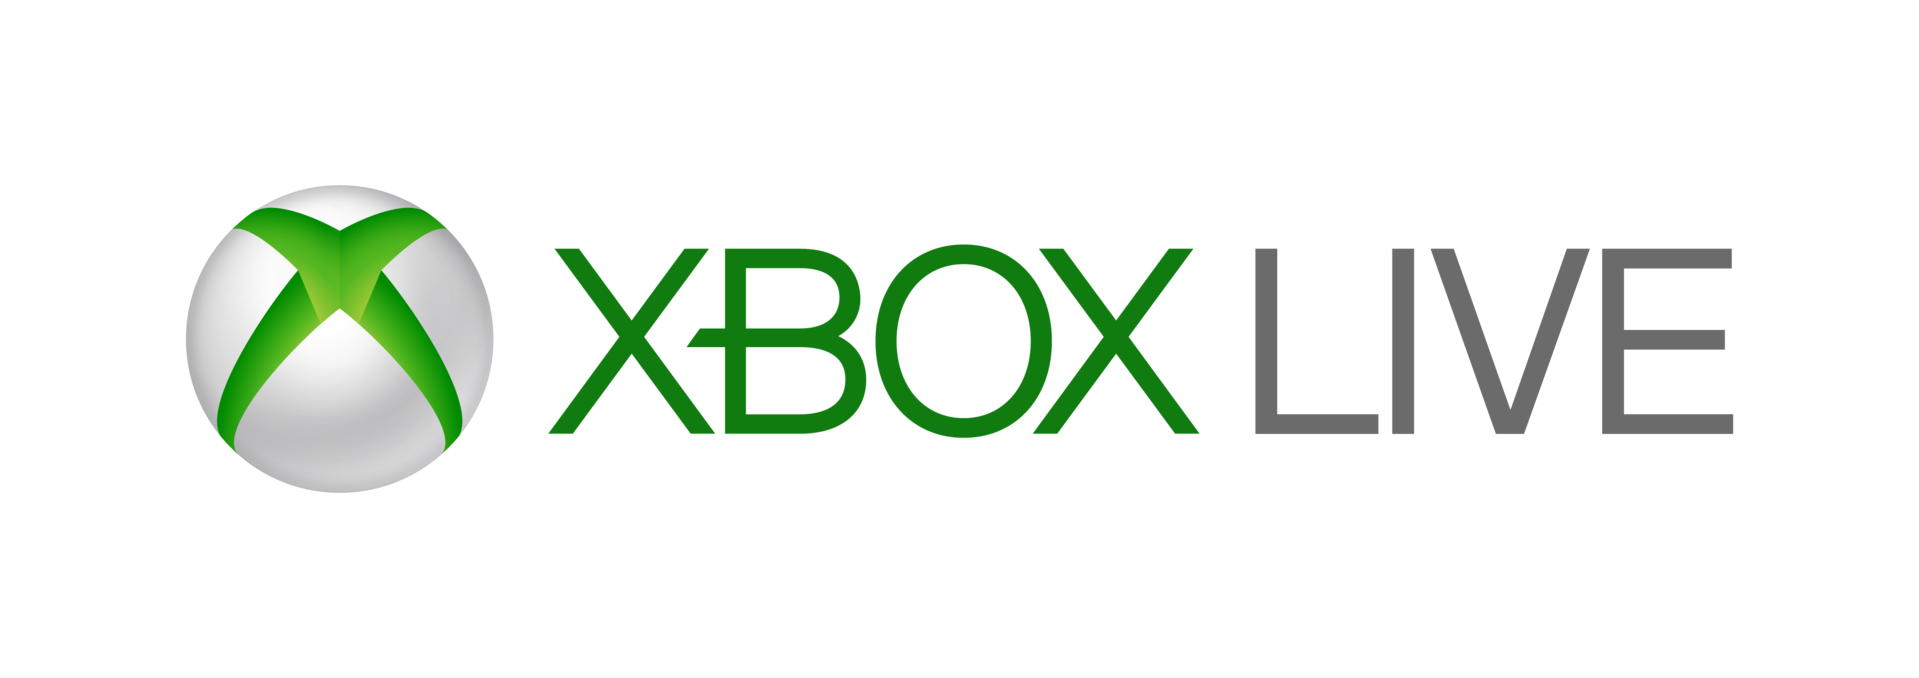 1920px xbox live logo